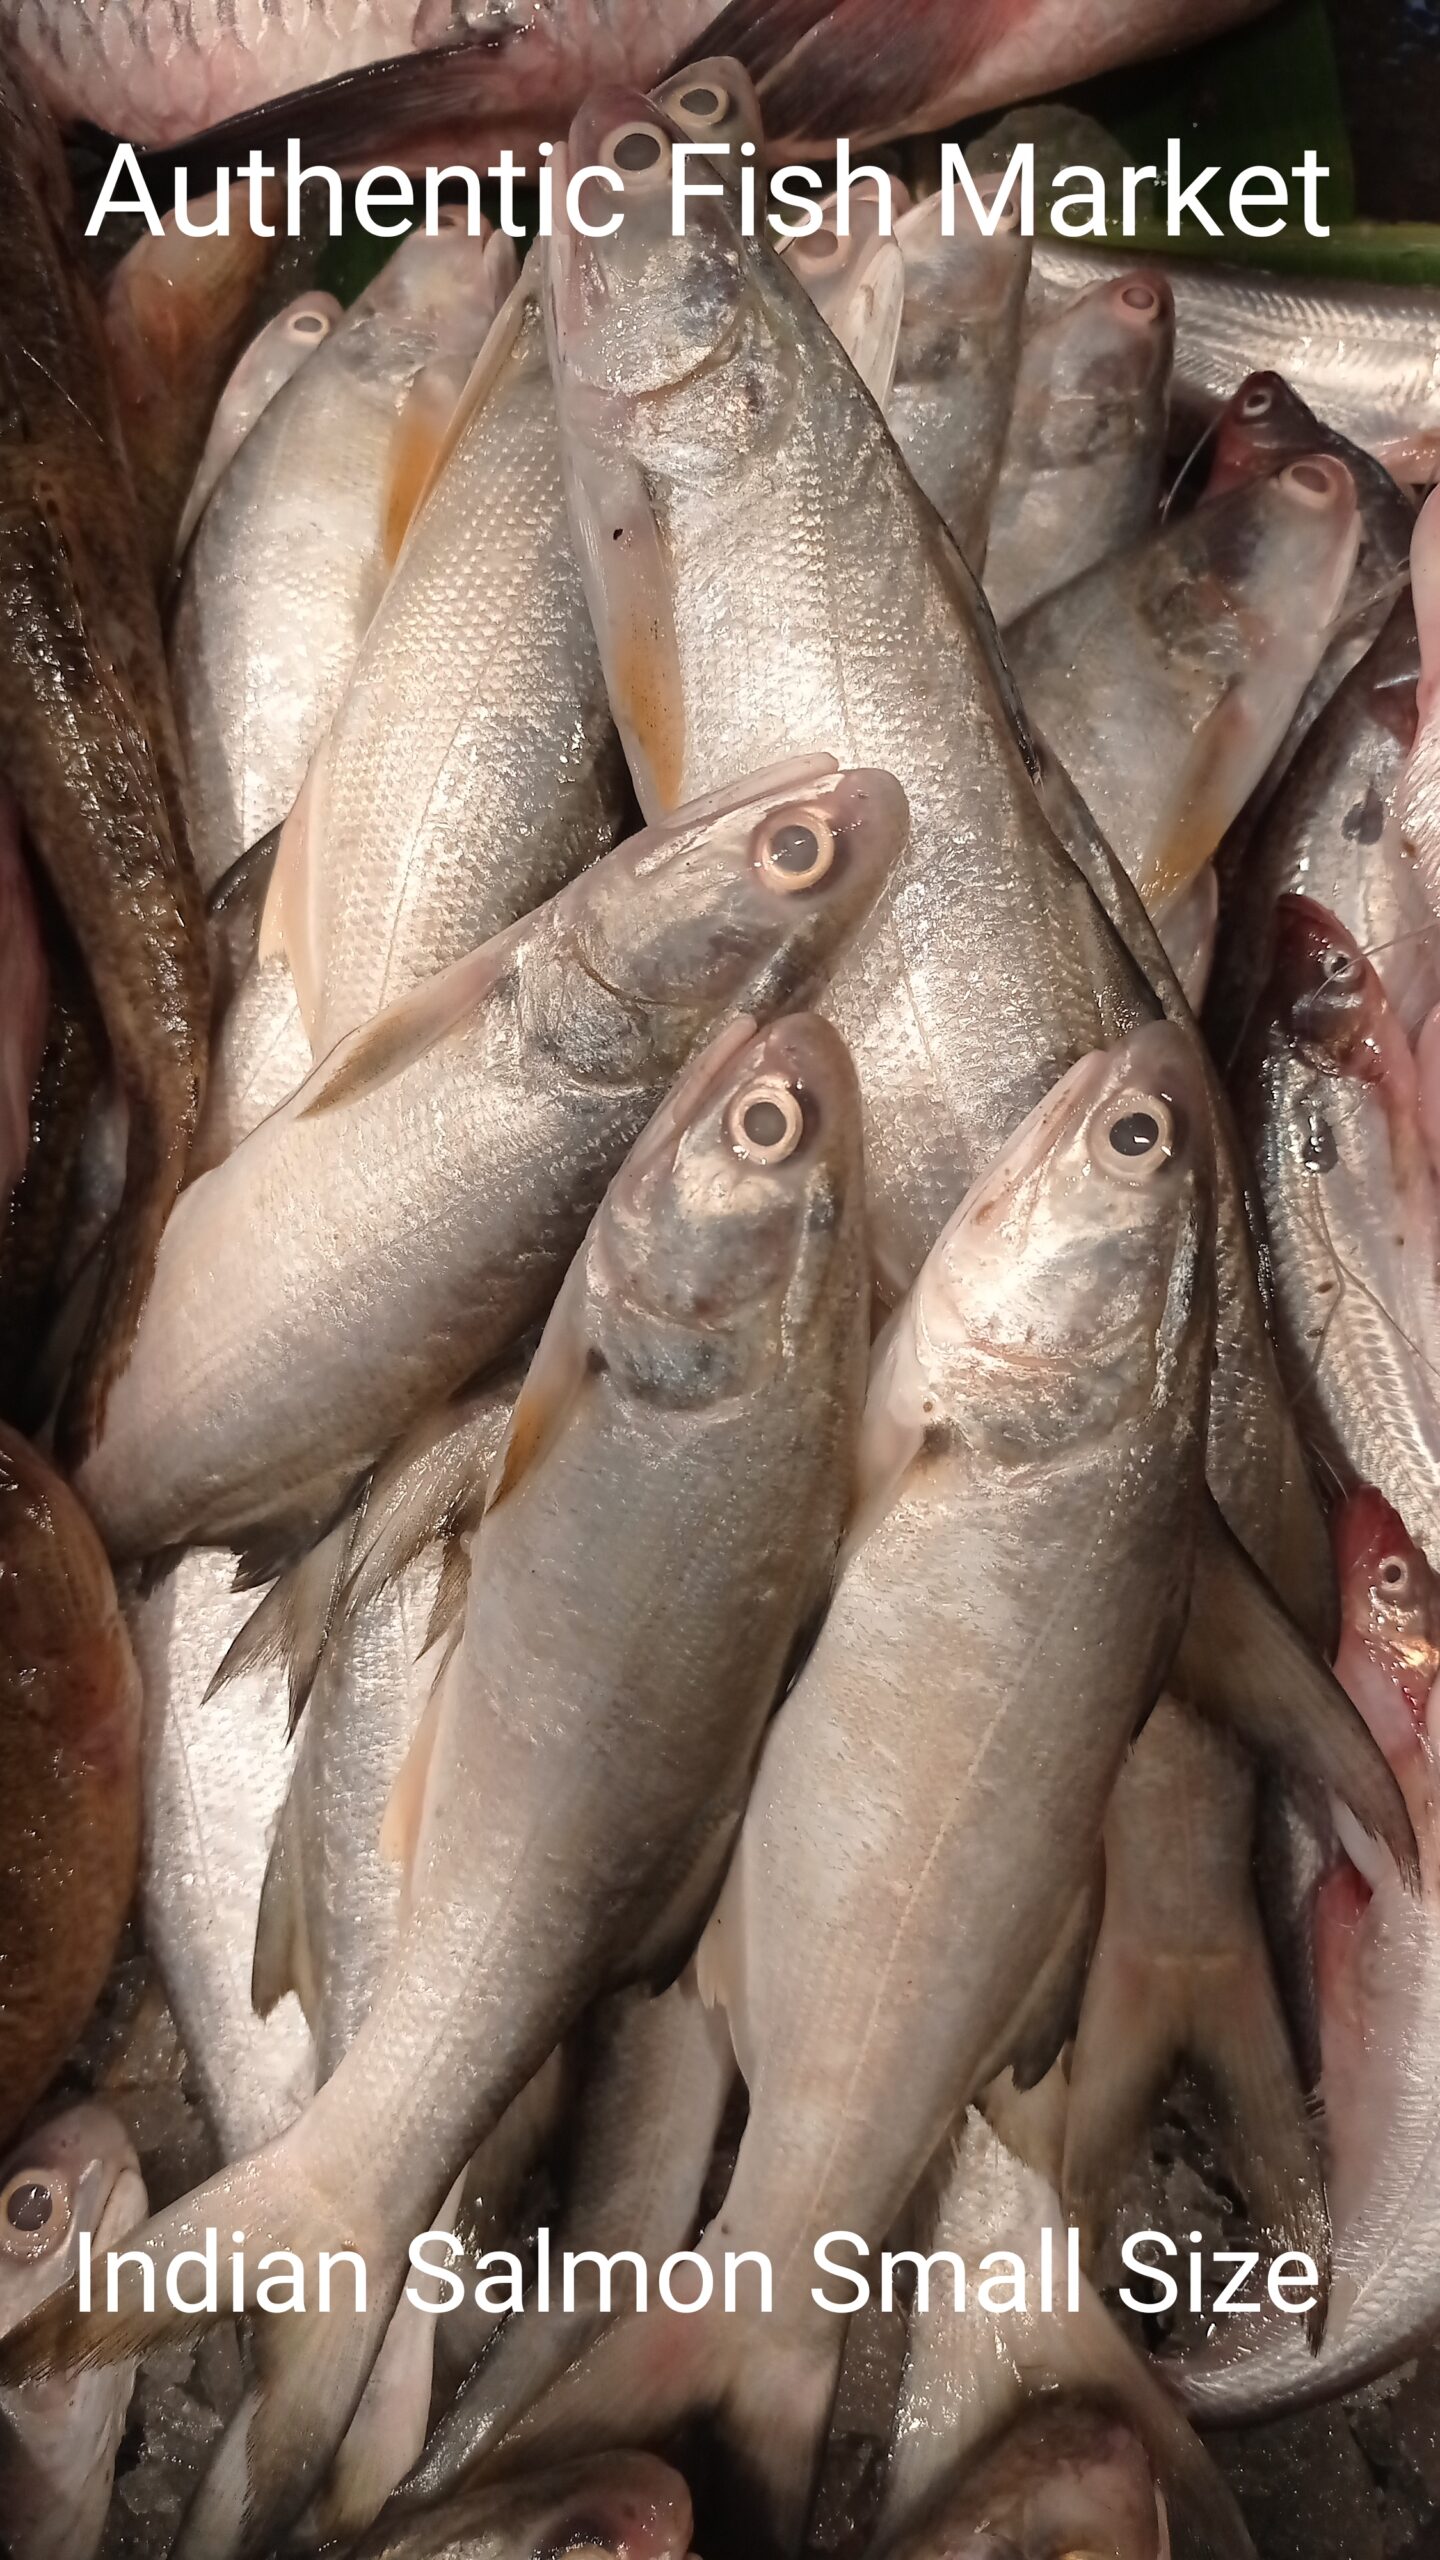 Fresh indian salmon fish small size (ছোট গুরজালী মাছ) - Authentic Fish  Market